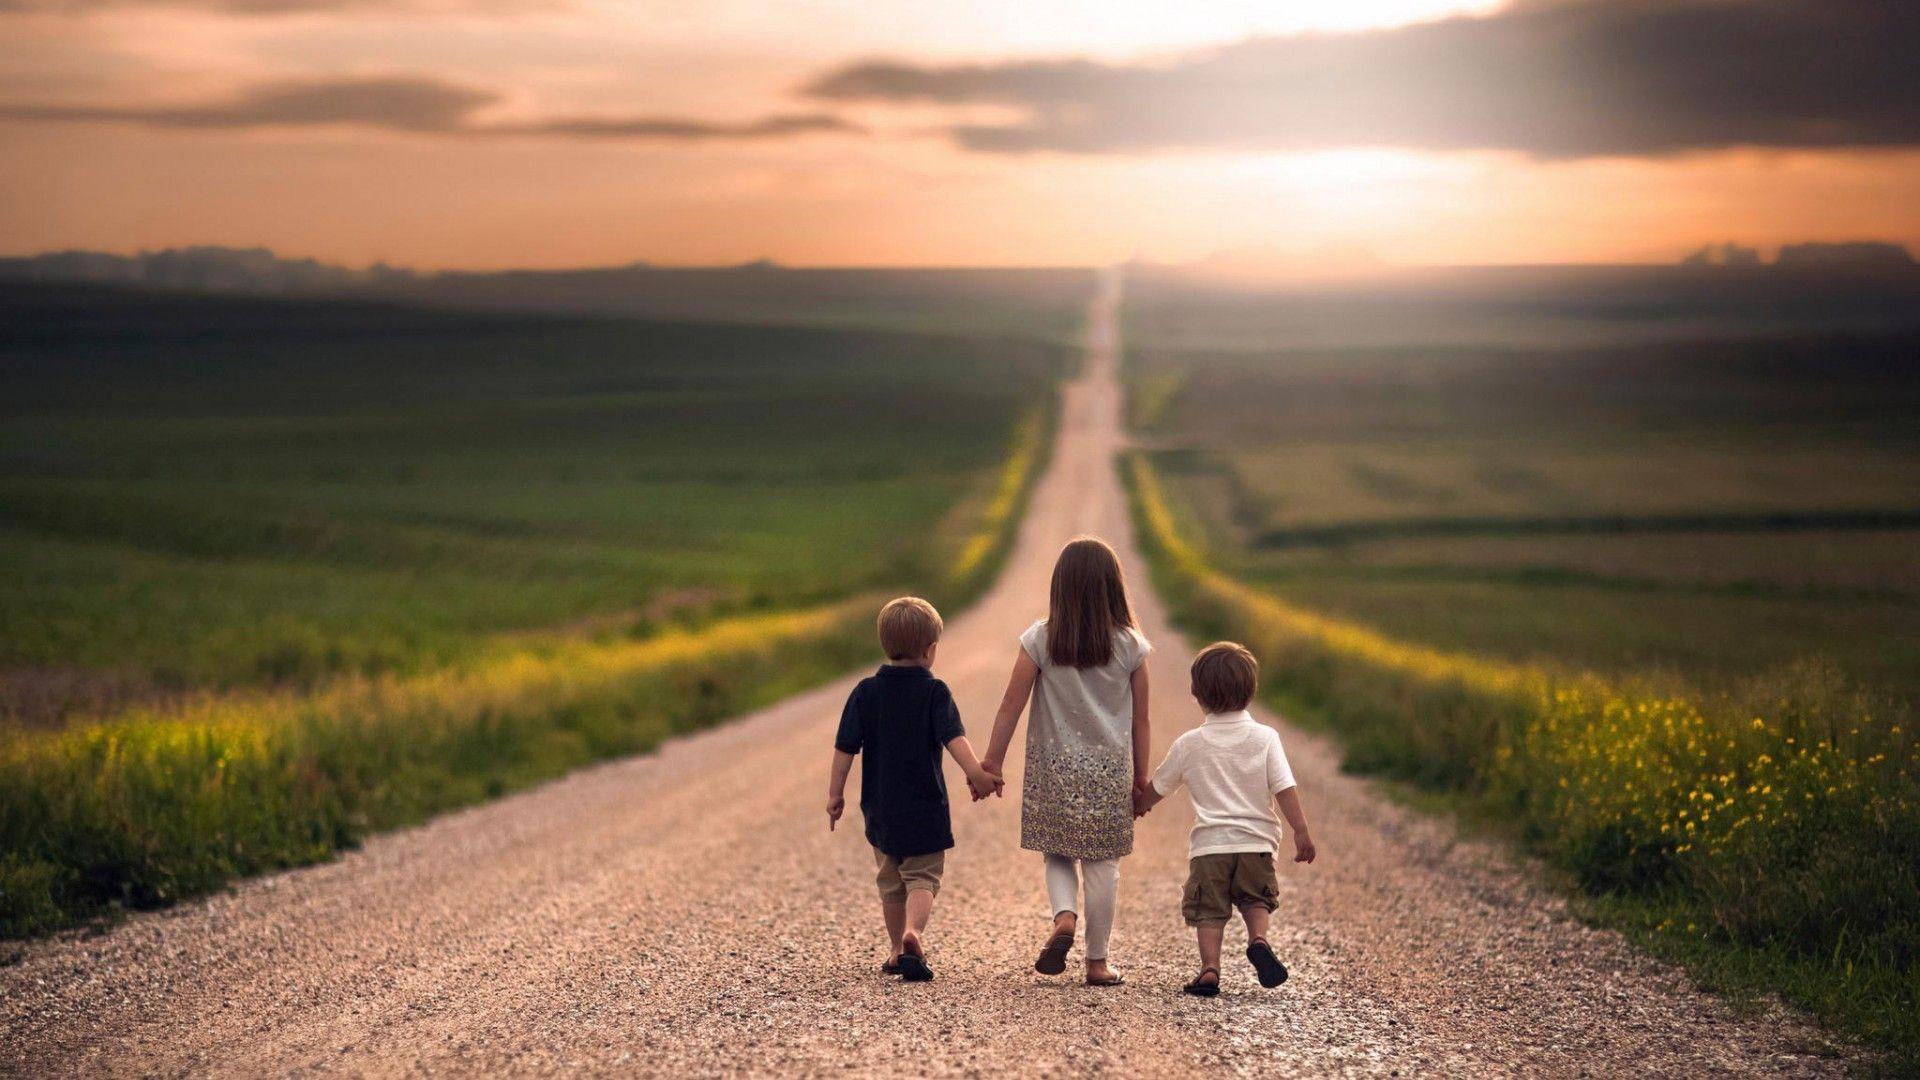 children, #holding hands, #Jake Olson, #path, #nature, #road